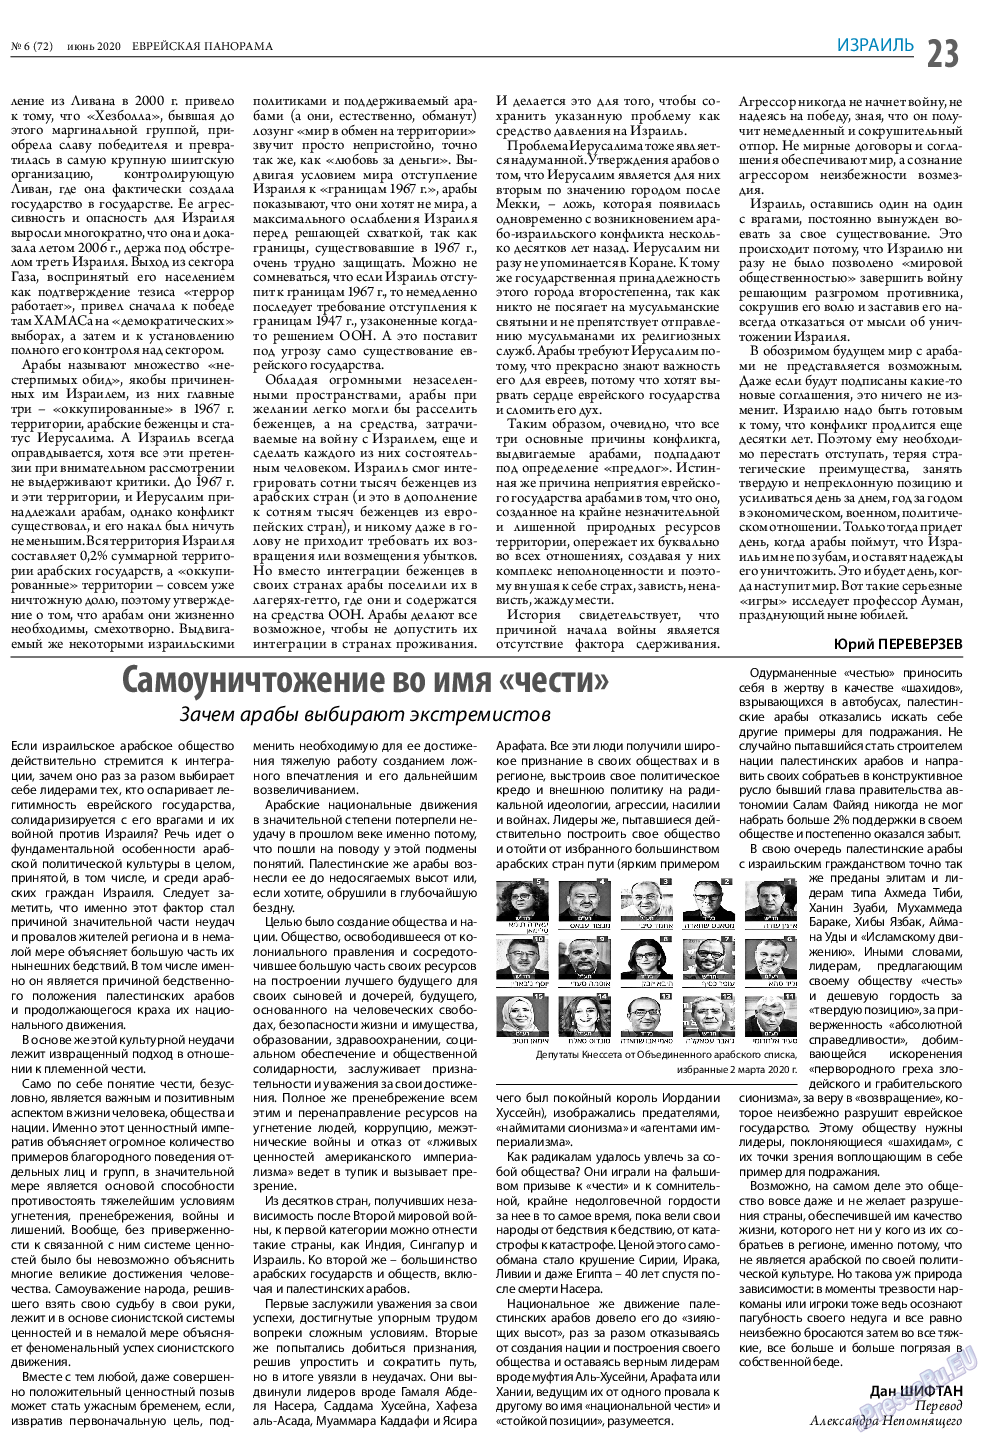 Еврейская панорама, газета. 2020 №6 стр.23